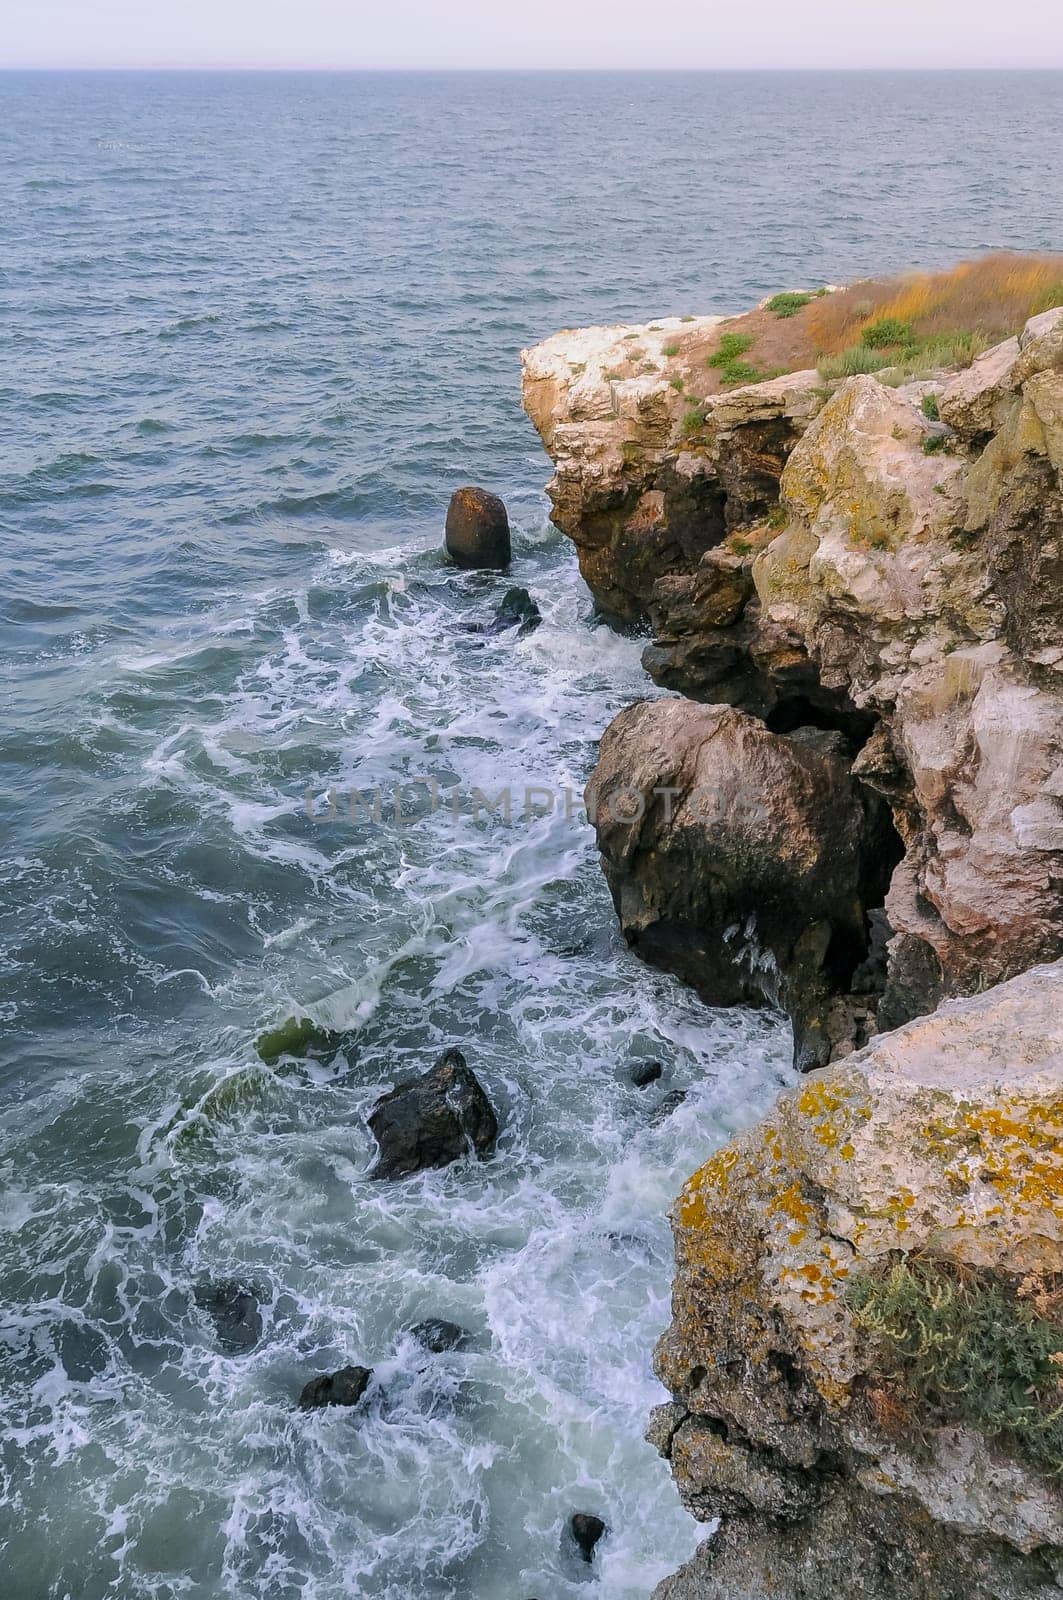 The steep stone coast of the Black Sea from Pontic limestones at Kazantip, Eastern Crimea